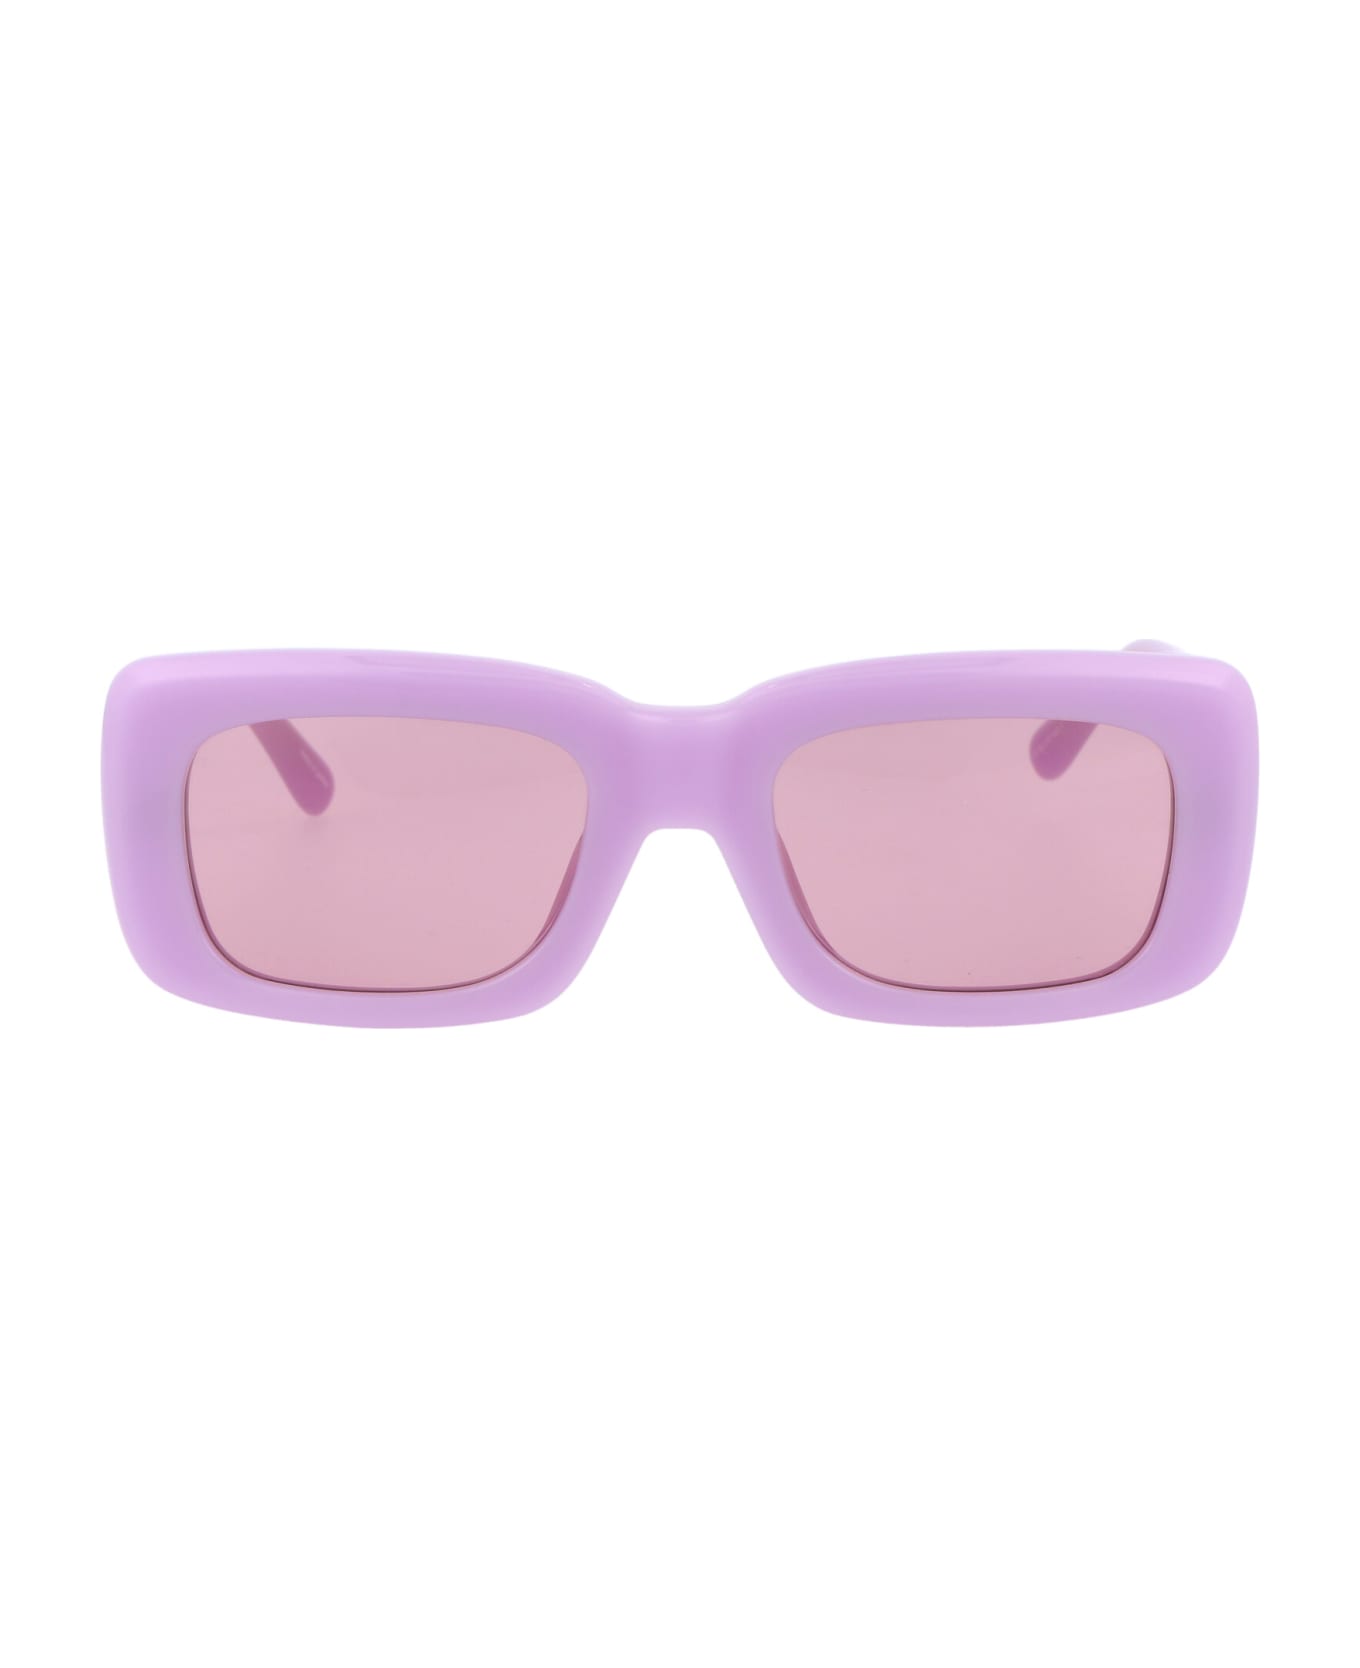 The Attico Marfa Sunglasses - PINK/YELLOWGOLD/PINK